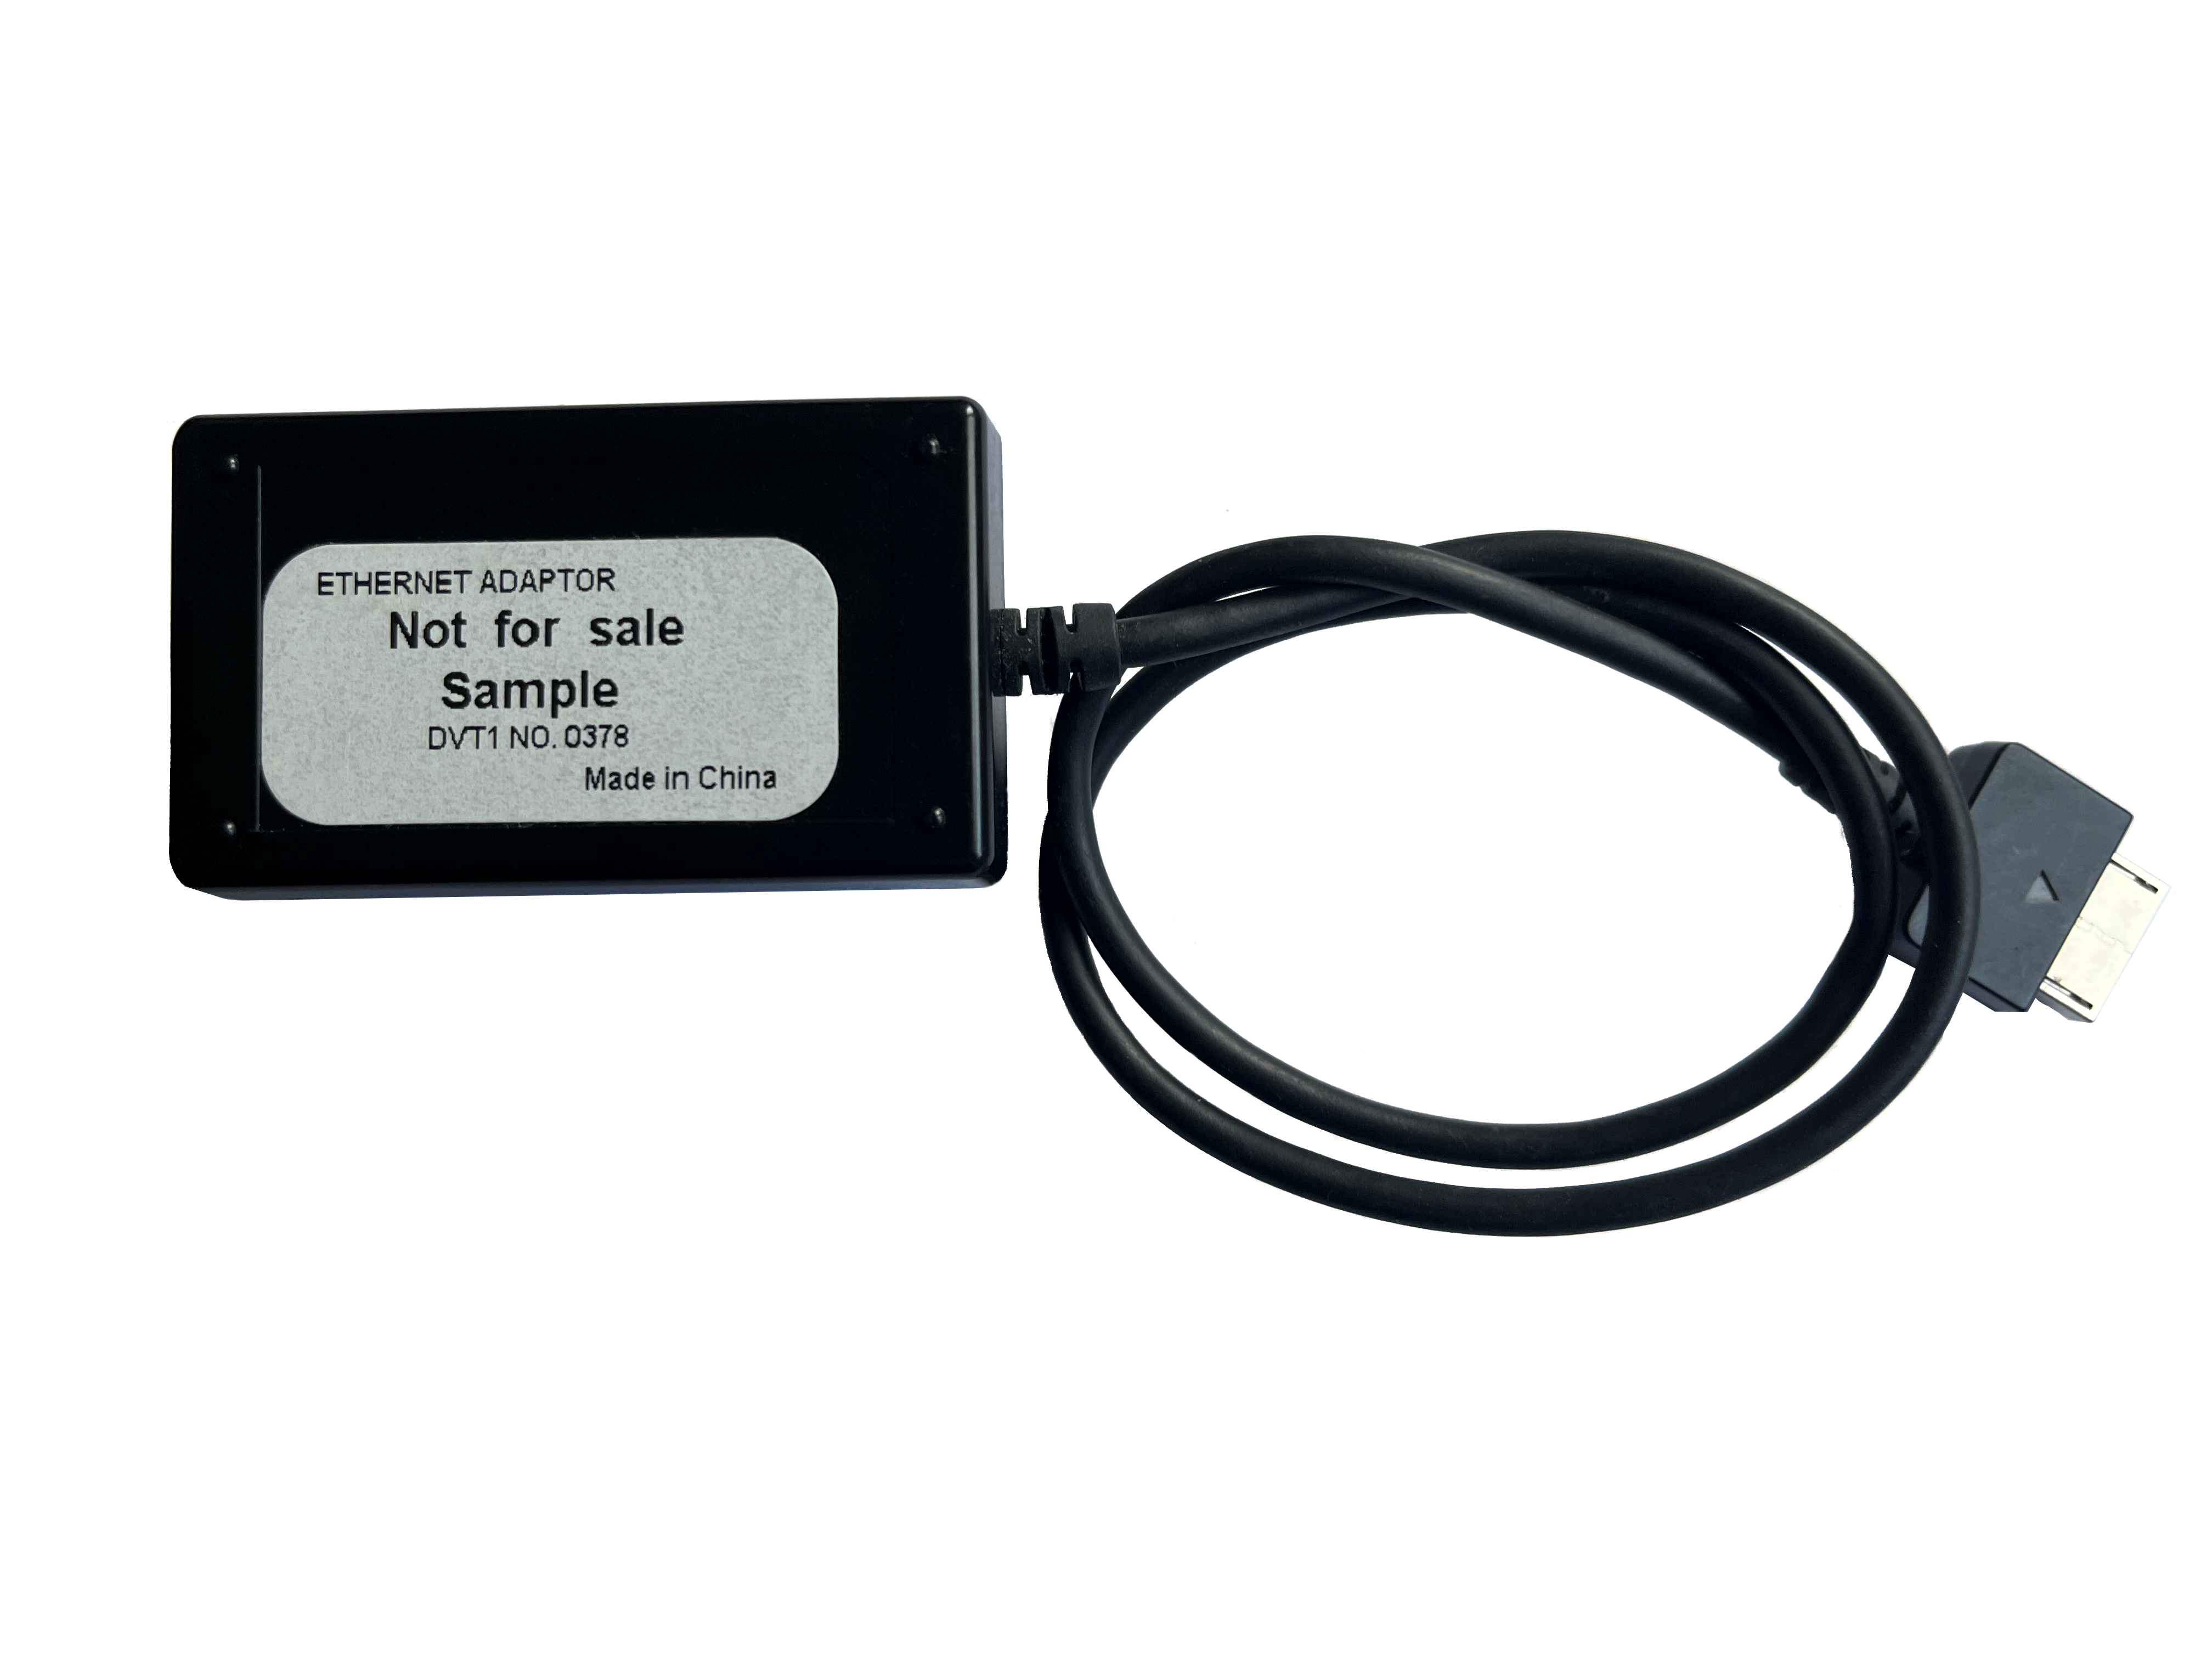  Sony PS Vita Ethernet Adaptor Prototype